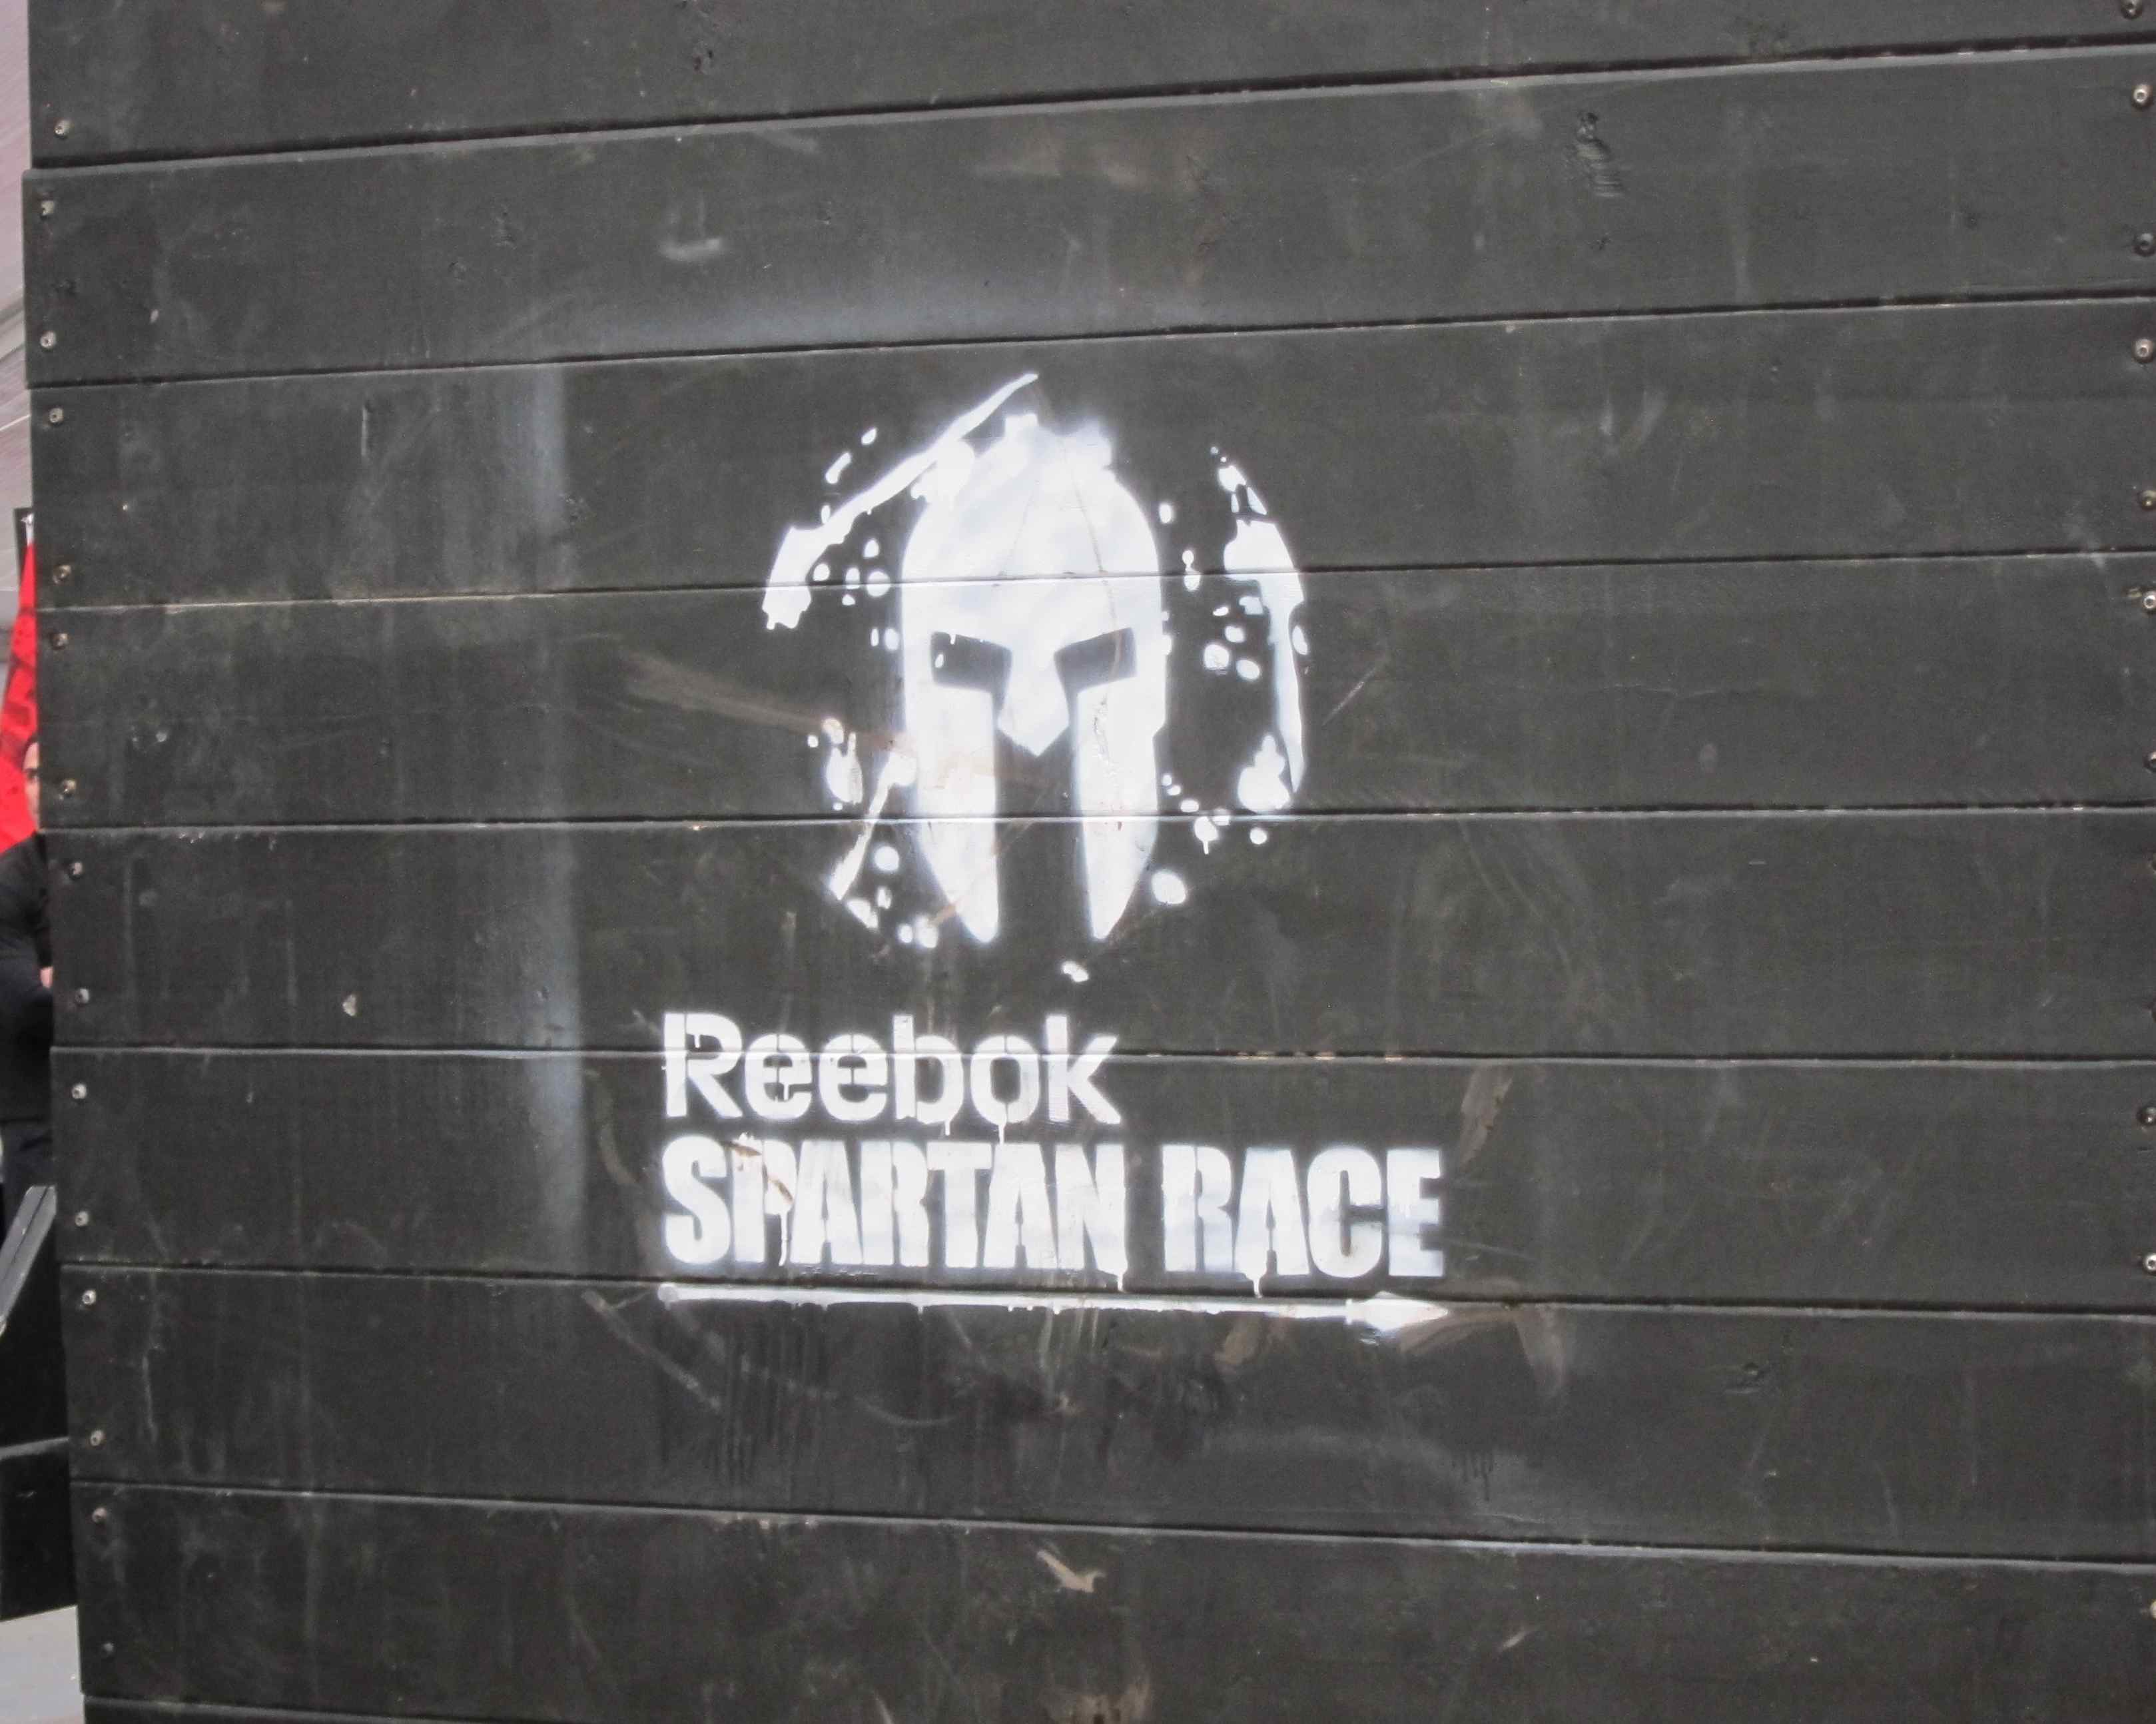 spartan race wallpaper